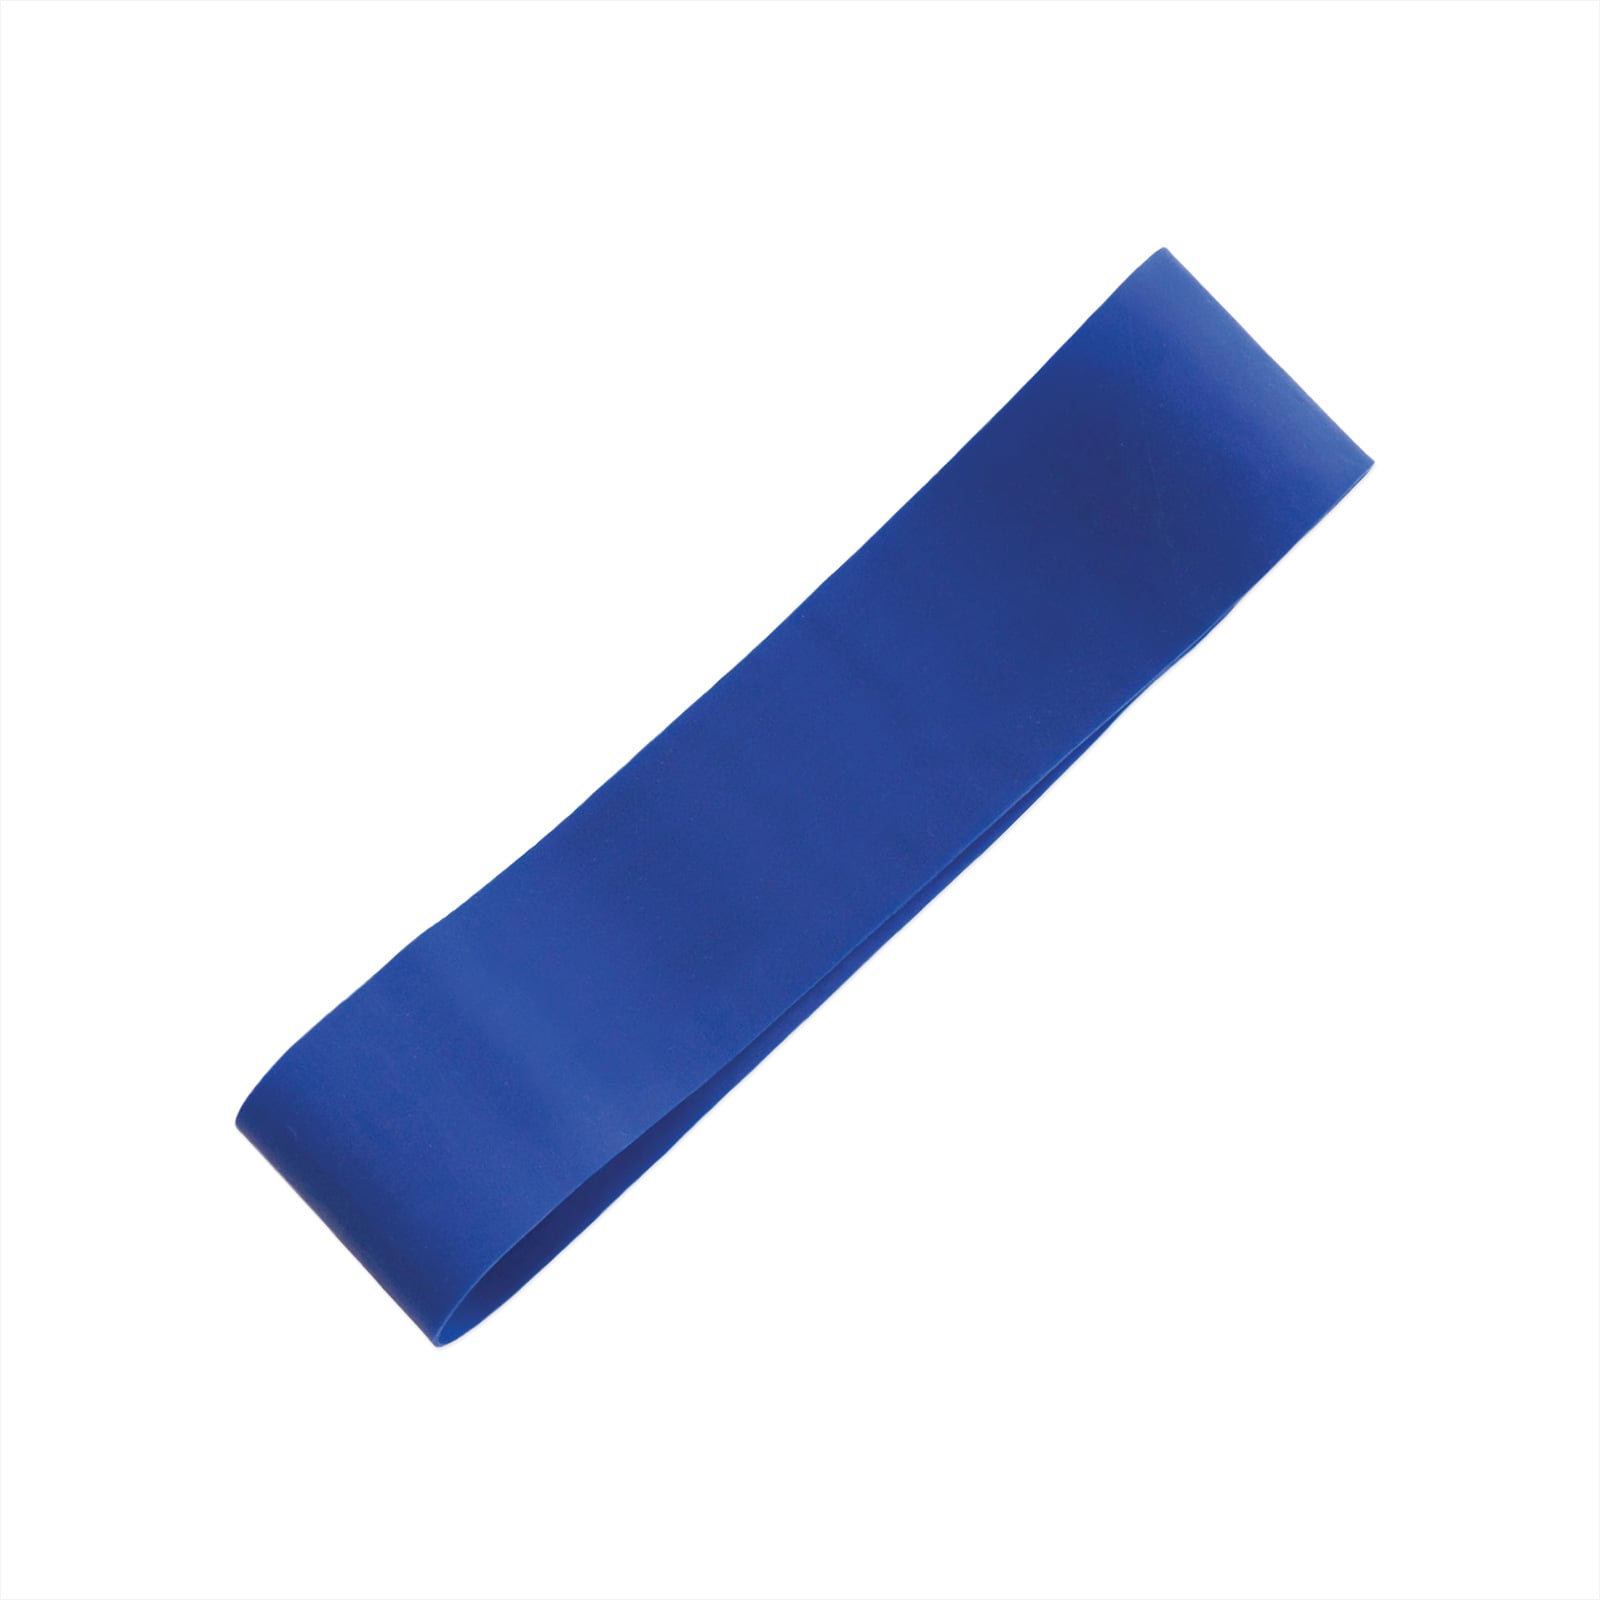  Mini bande elastique 25x5.3cm bleue - Extra-fort